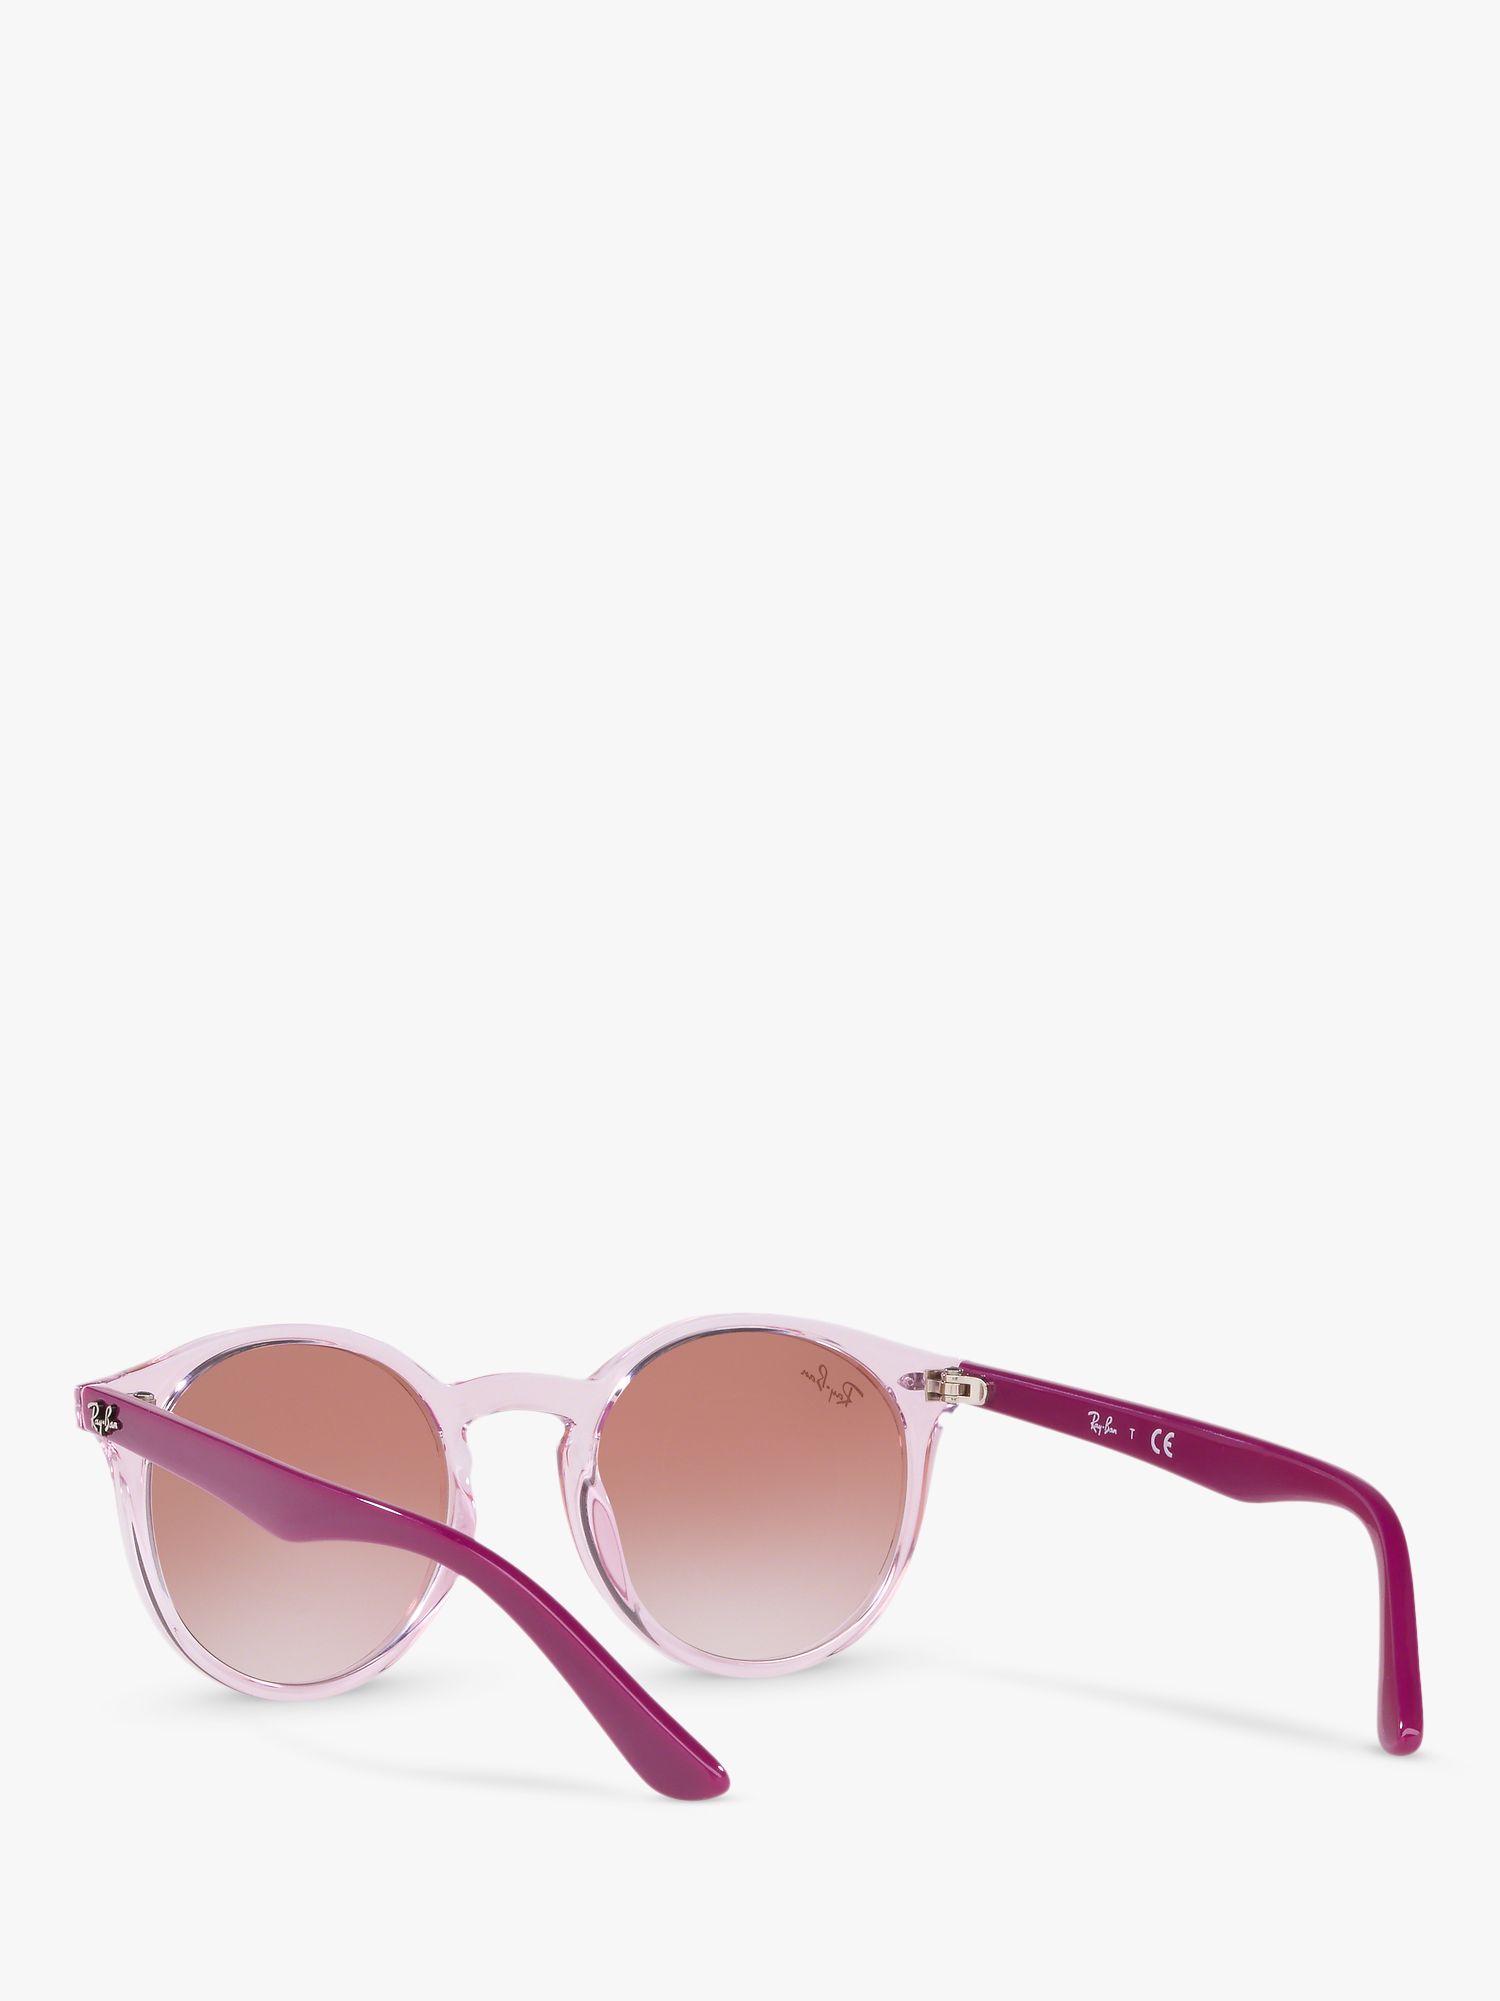 Ray-Ban Junior RJ9064S Round Sunglasses, Light Pink/Red Gradient